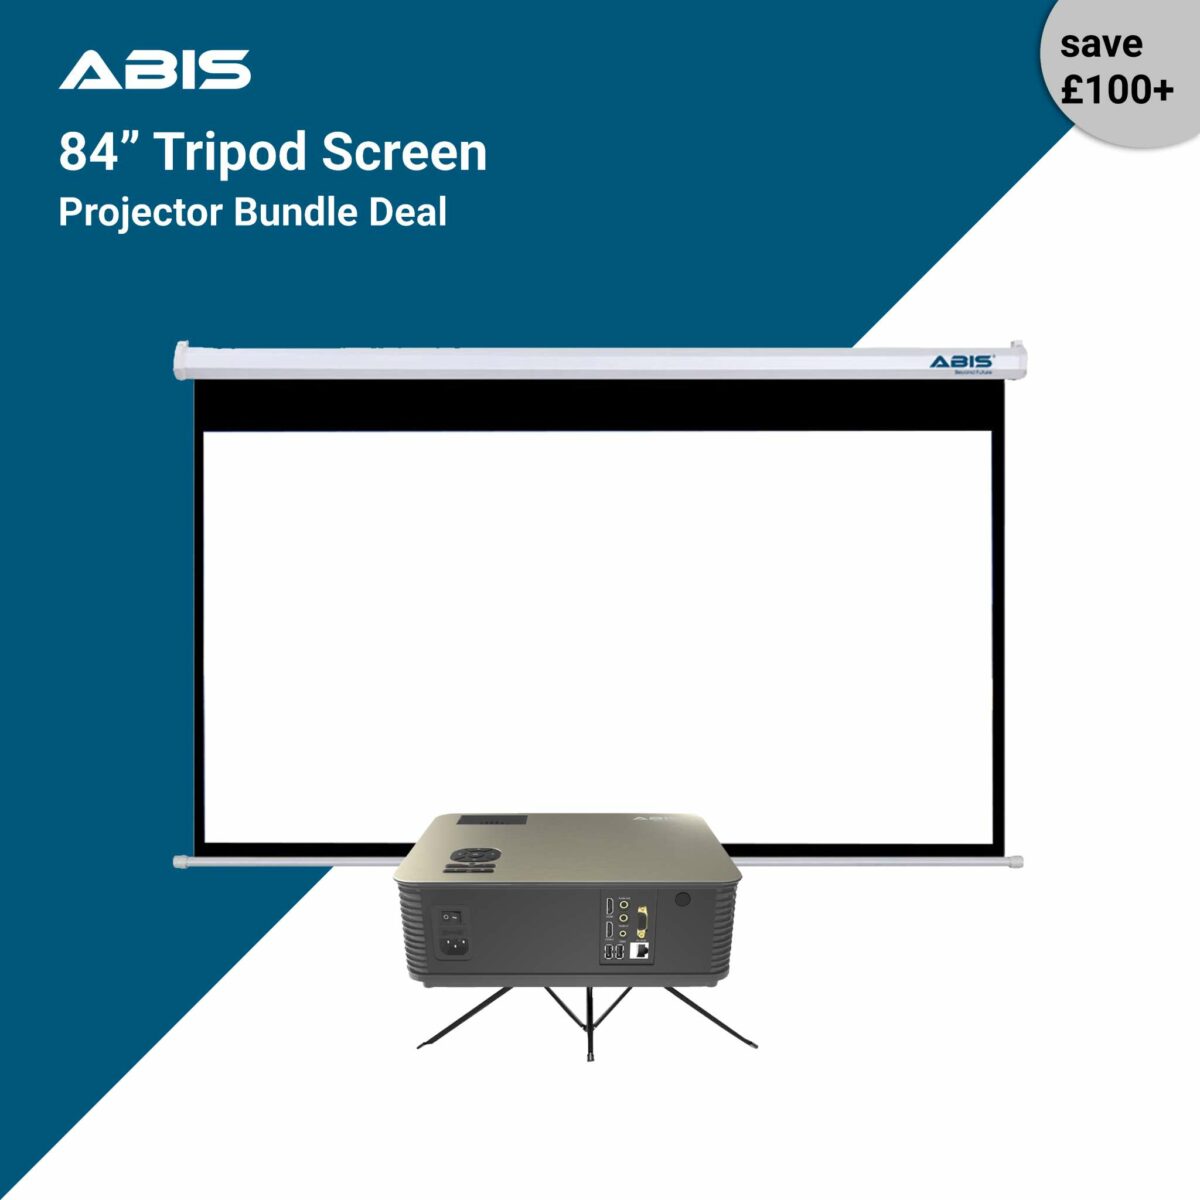 84” Tripod Projector Screen & Projector Bundle - ABIS